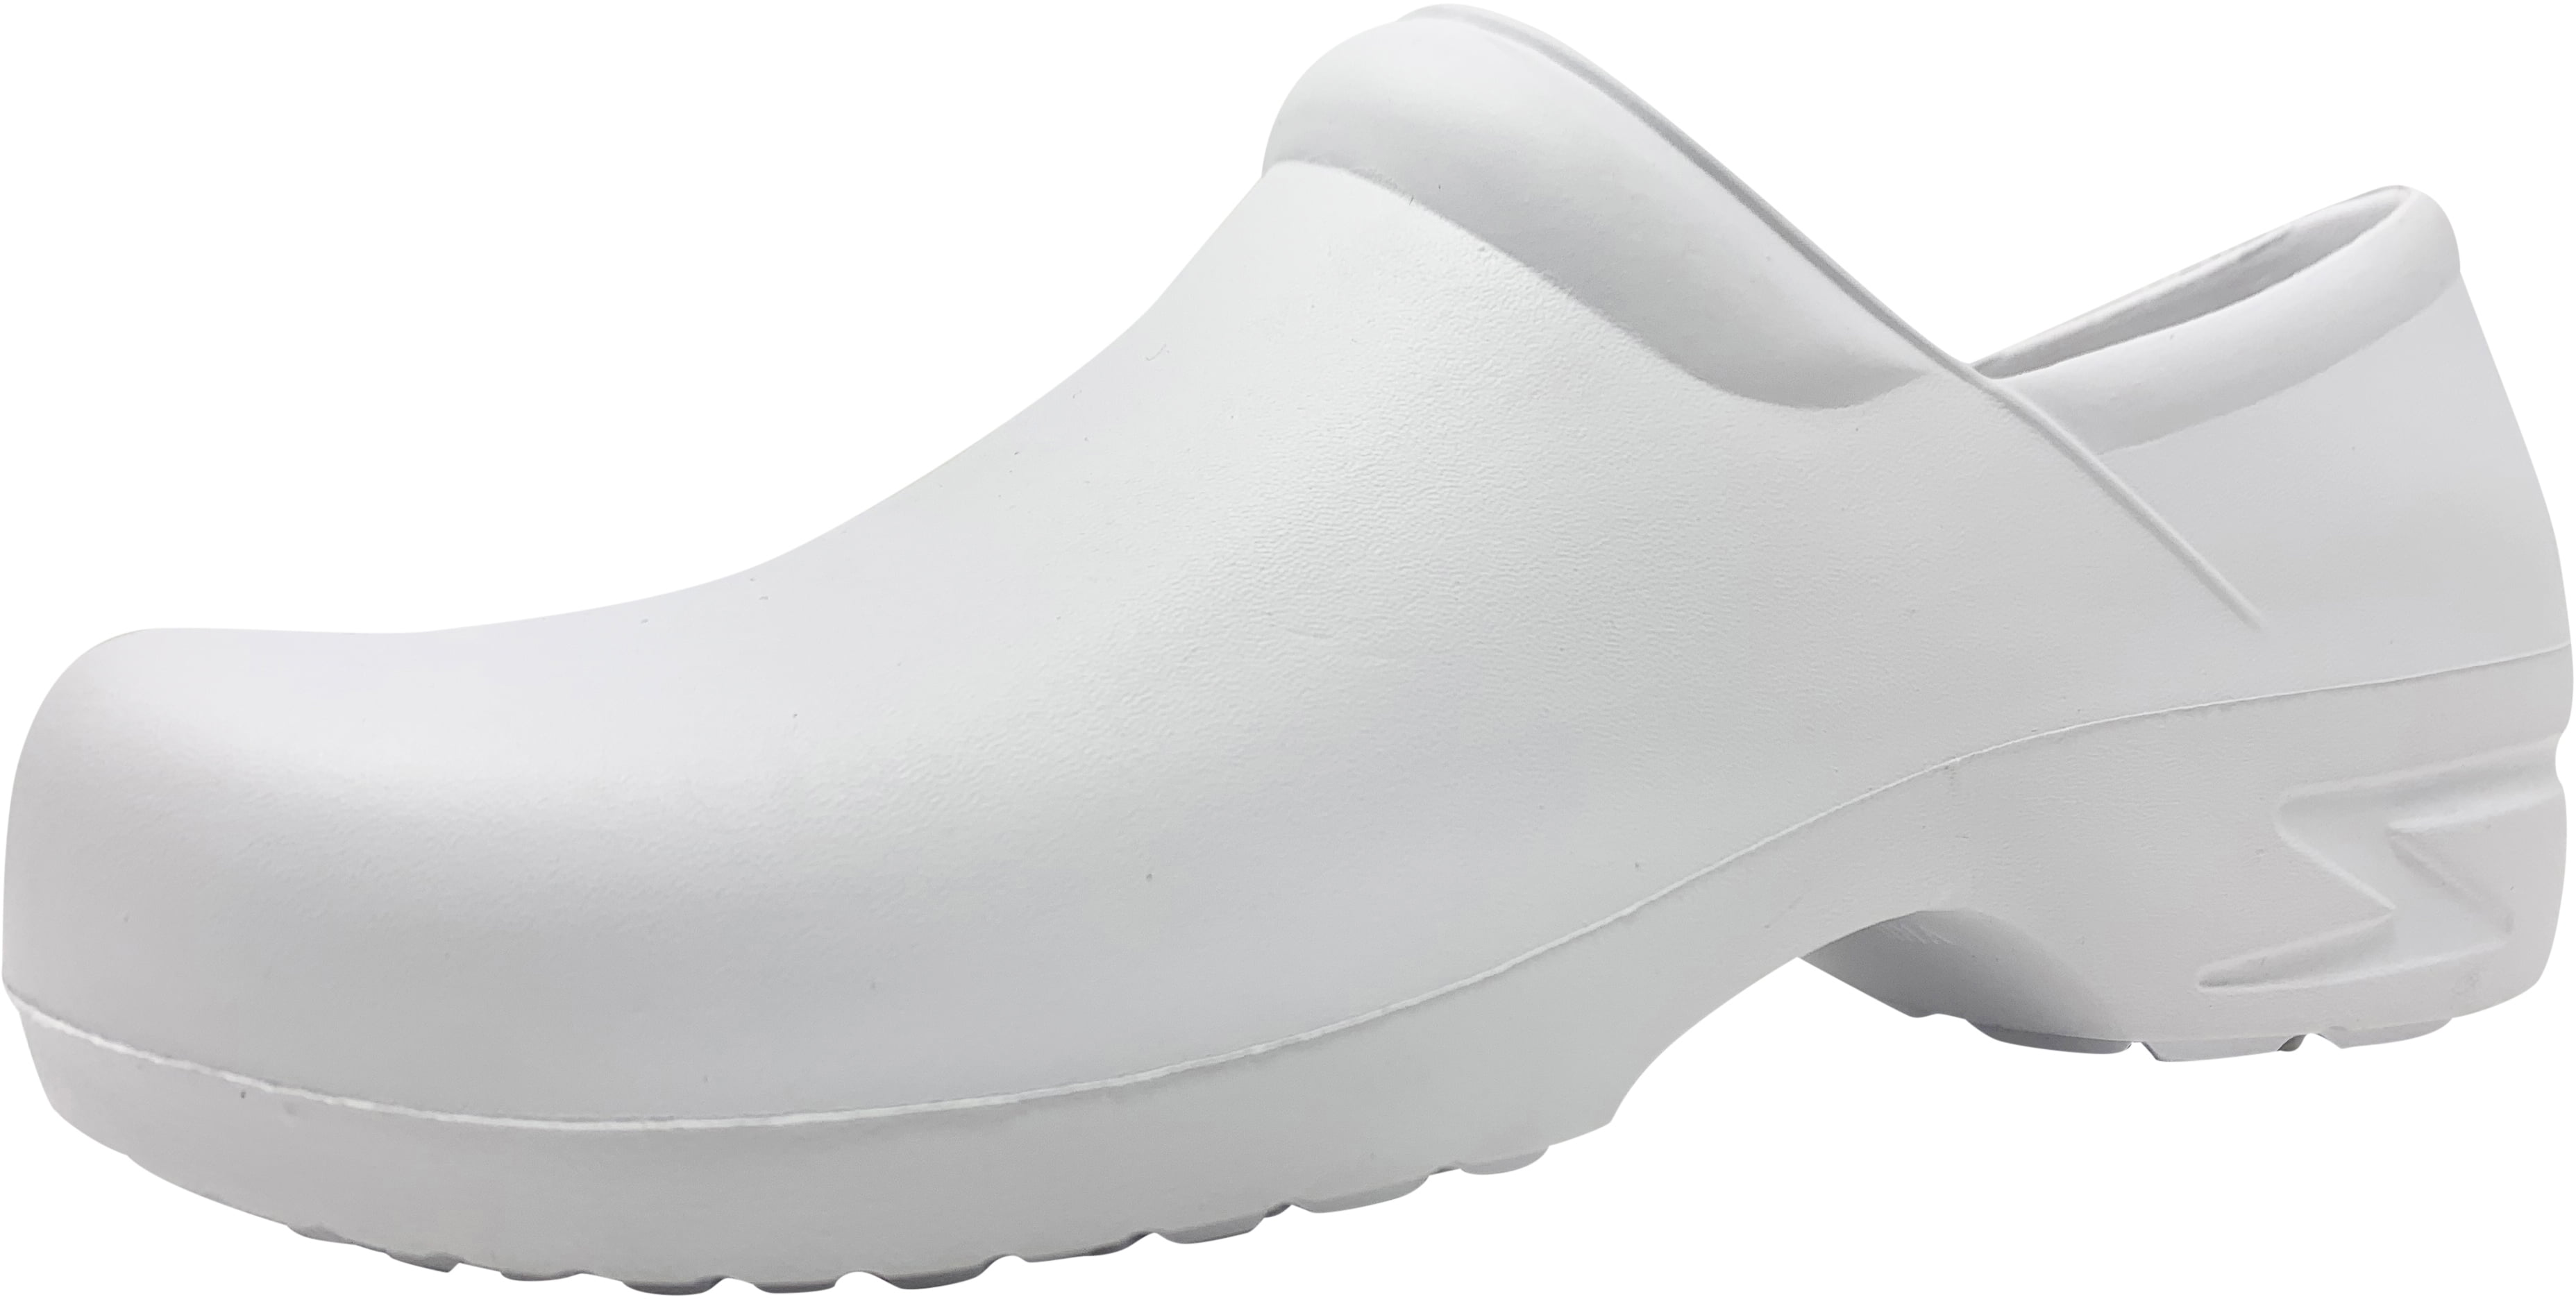 Women's Medical Nursing Ultralite Clogs w/ Heel Strap Slip Resistant Light Shoes 